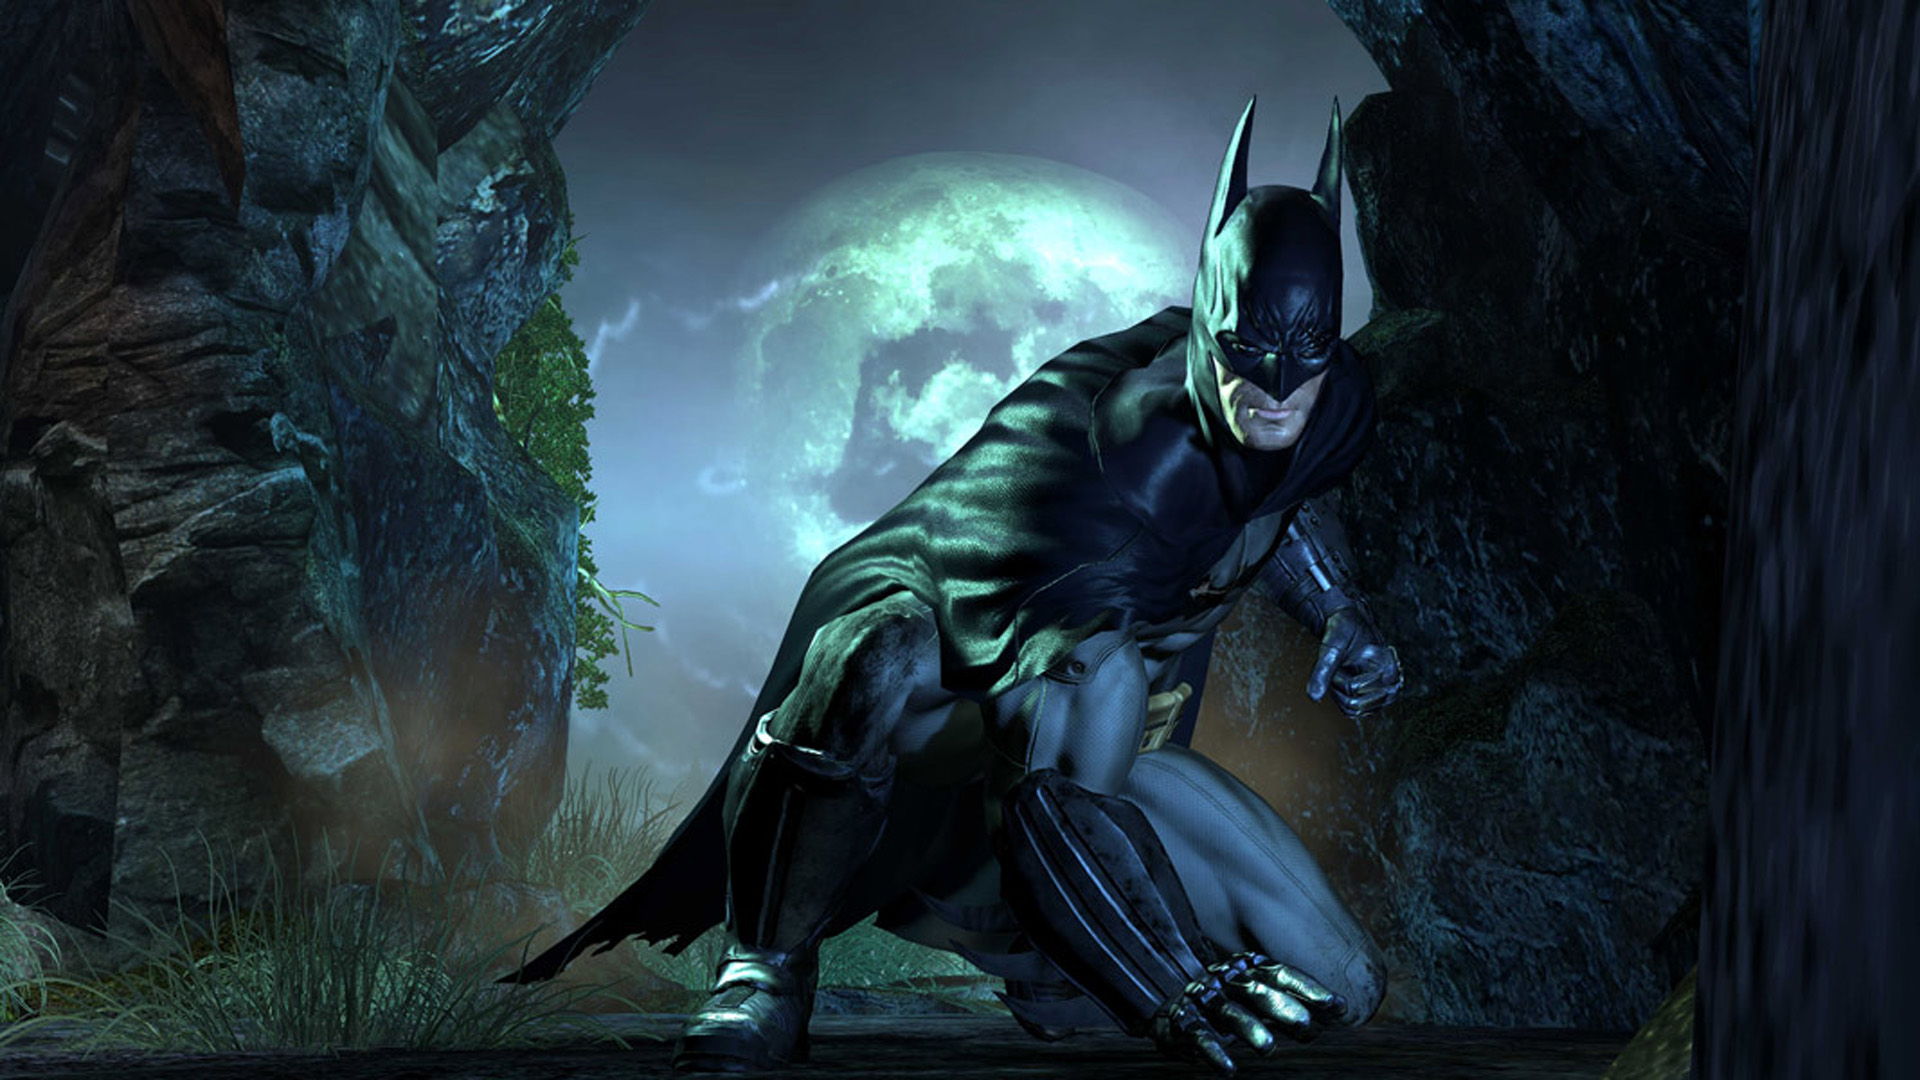 Batman Arkham Series Of Action Adventure Video Game Desktop Wallpaper HD, Wallpaper13.com